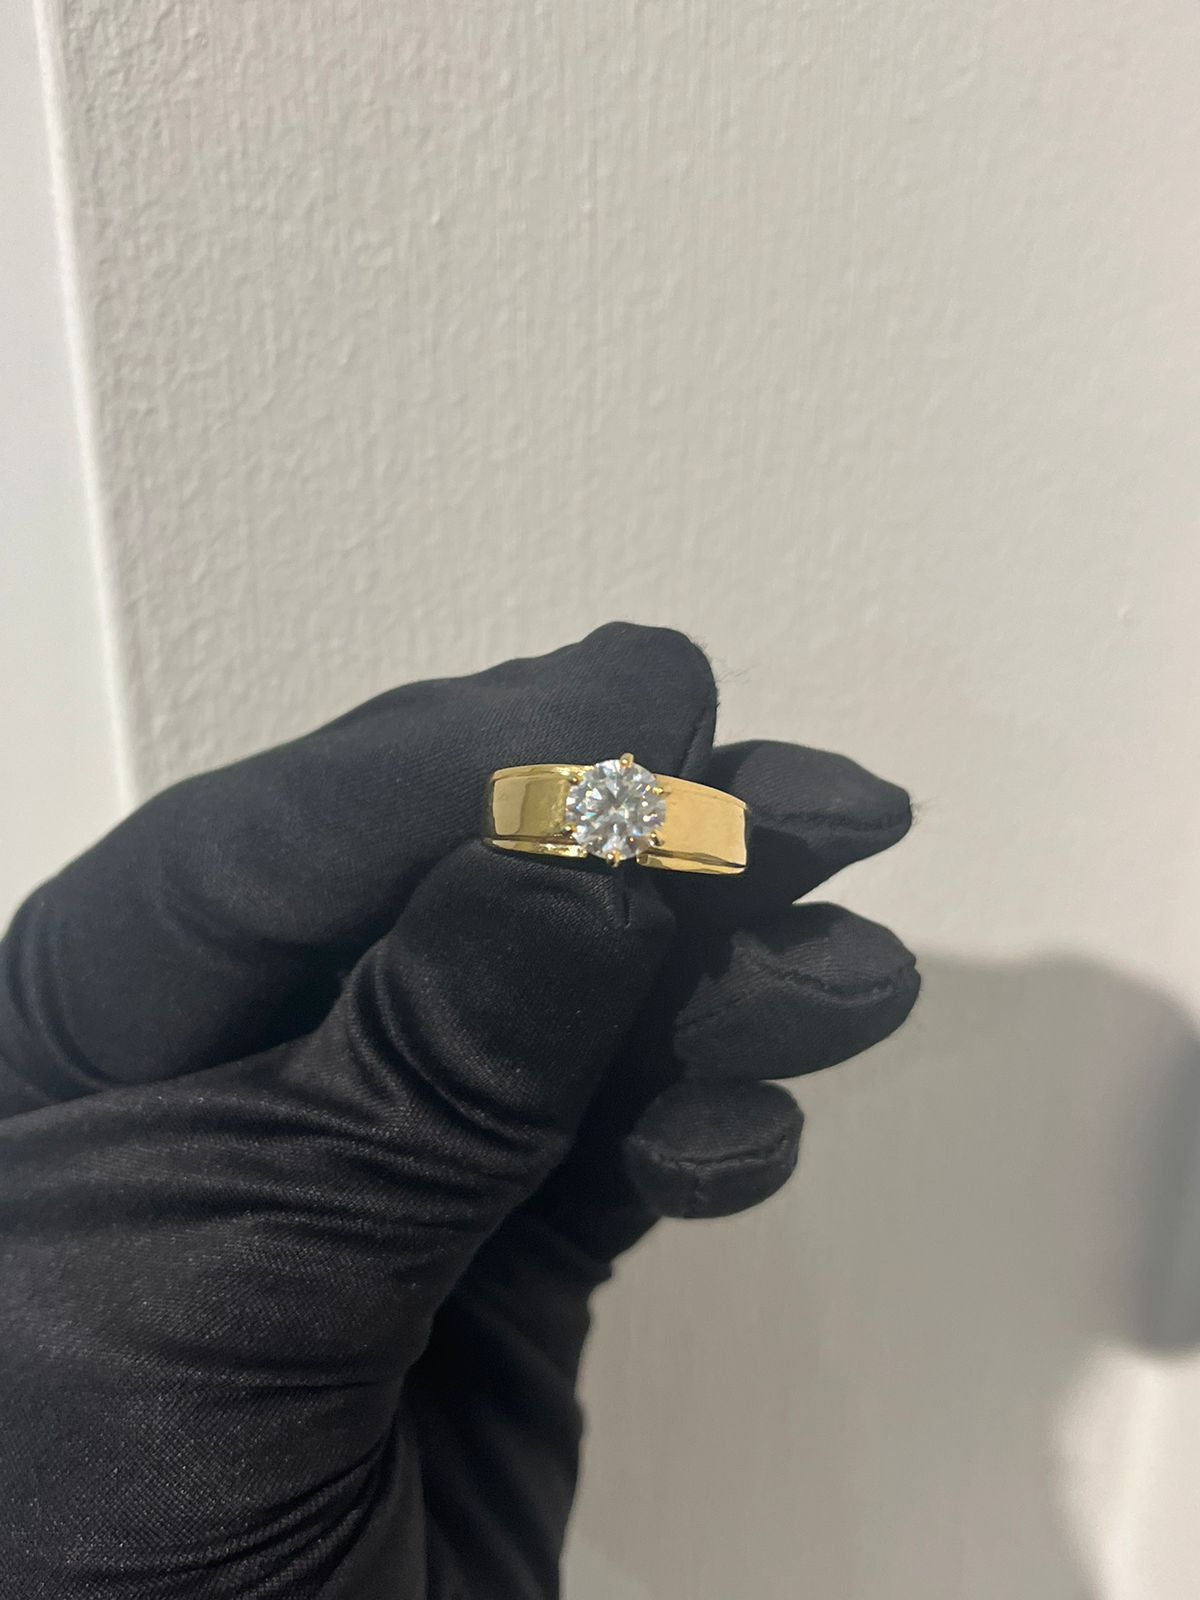 Solitaire Ring 1 Carat for Men - 14Kt Hallmarked Gold & Certified Moissanite Diamond (SKU2)